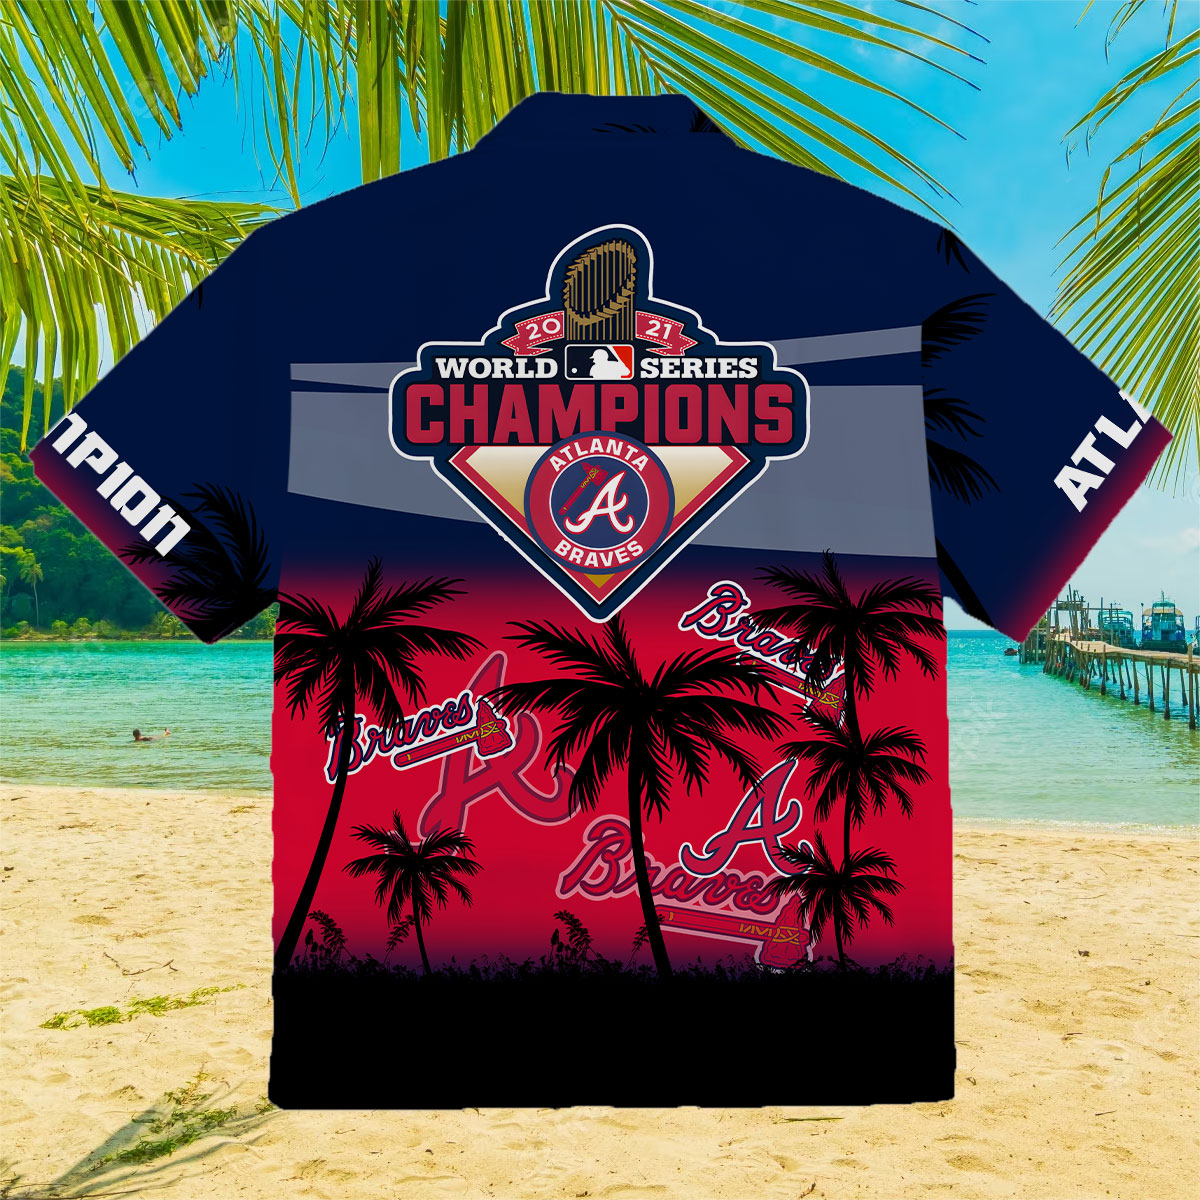 Atlanta Braves MLB For Sports Fan Full Print Hawaiian Style Shirt -  Senprintmart Store